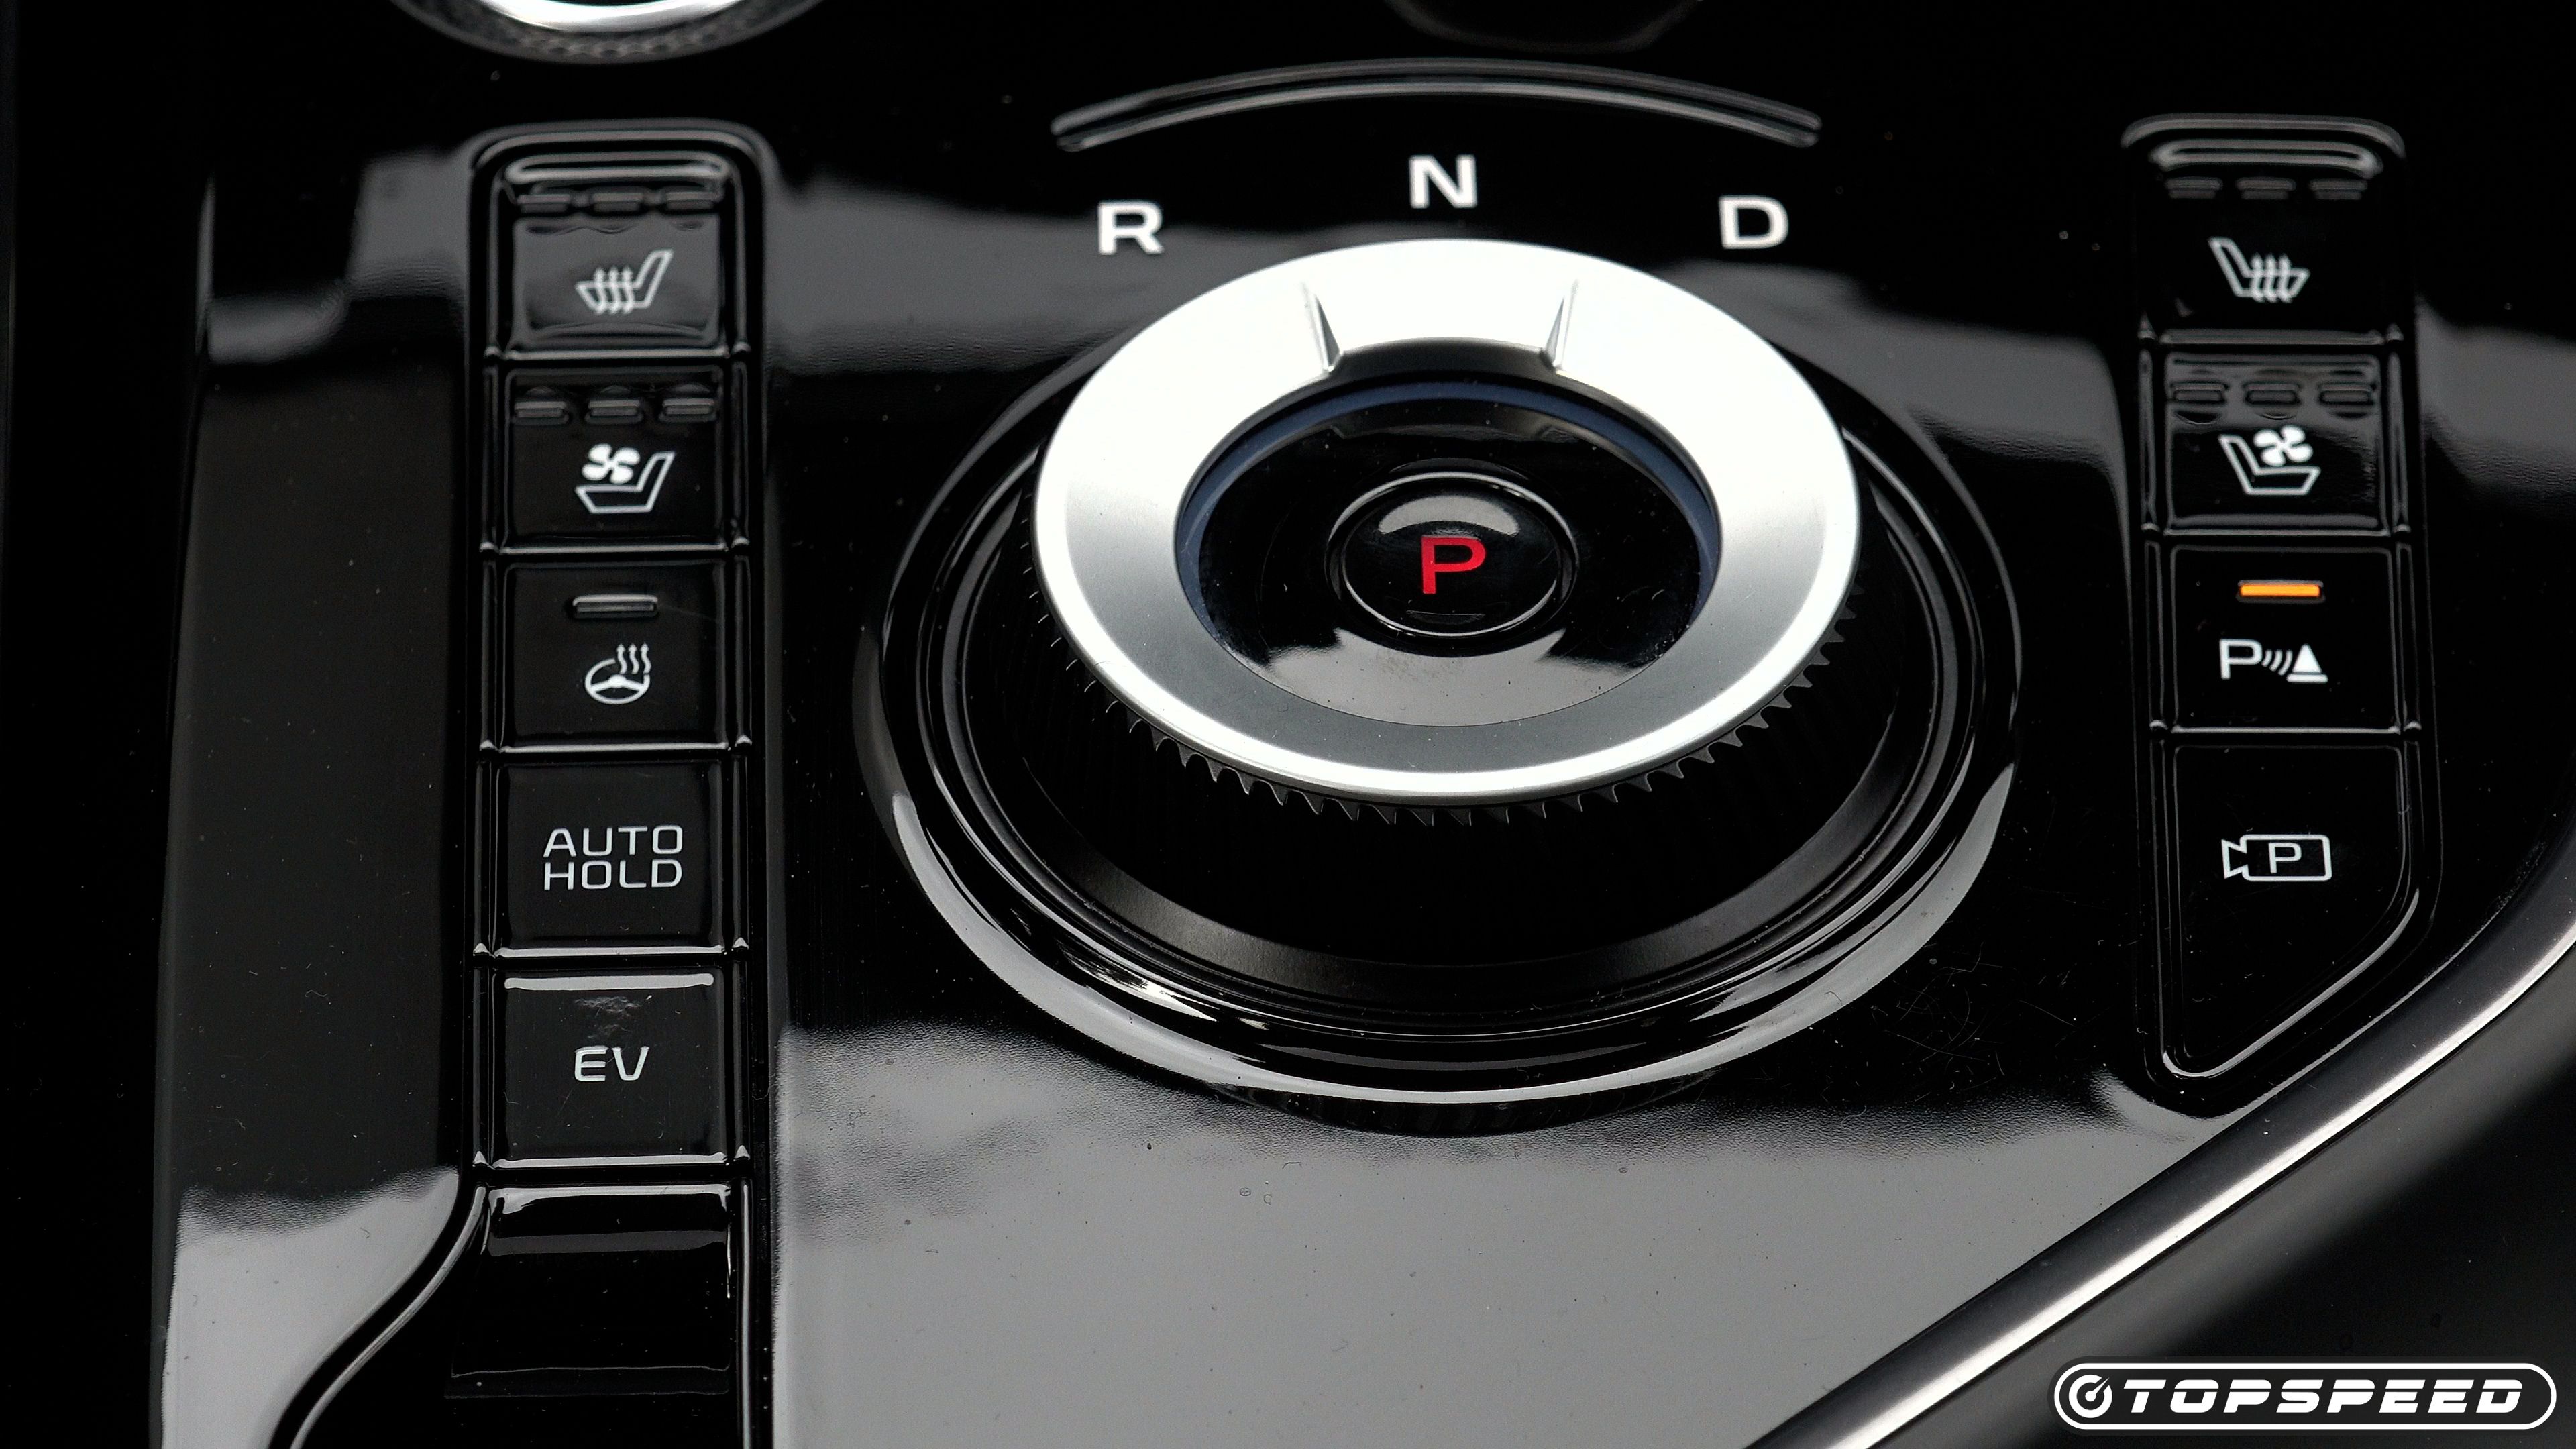 Niro Plug-in Hybrid gear shift center console